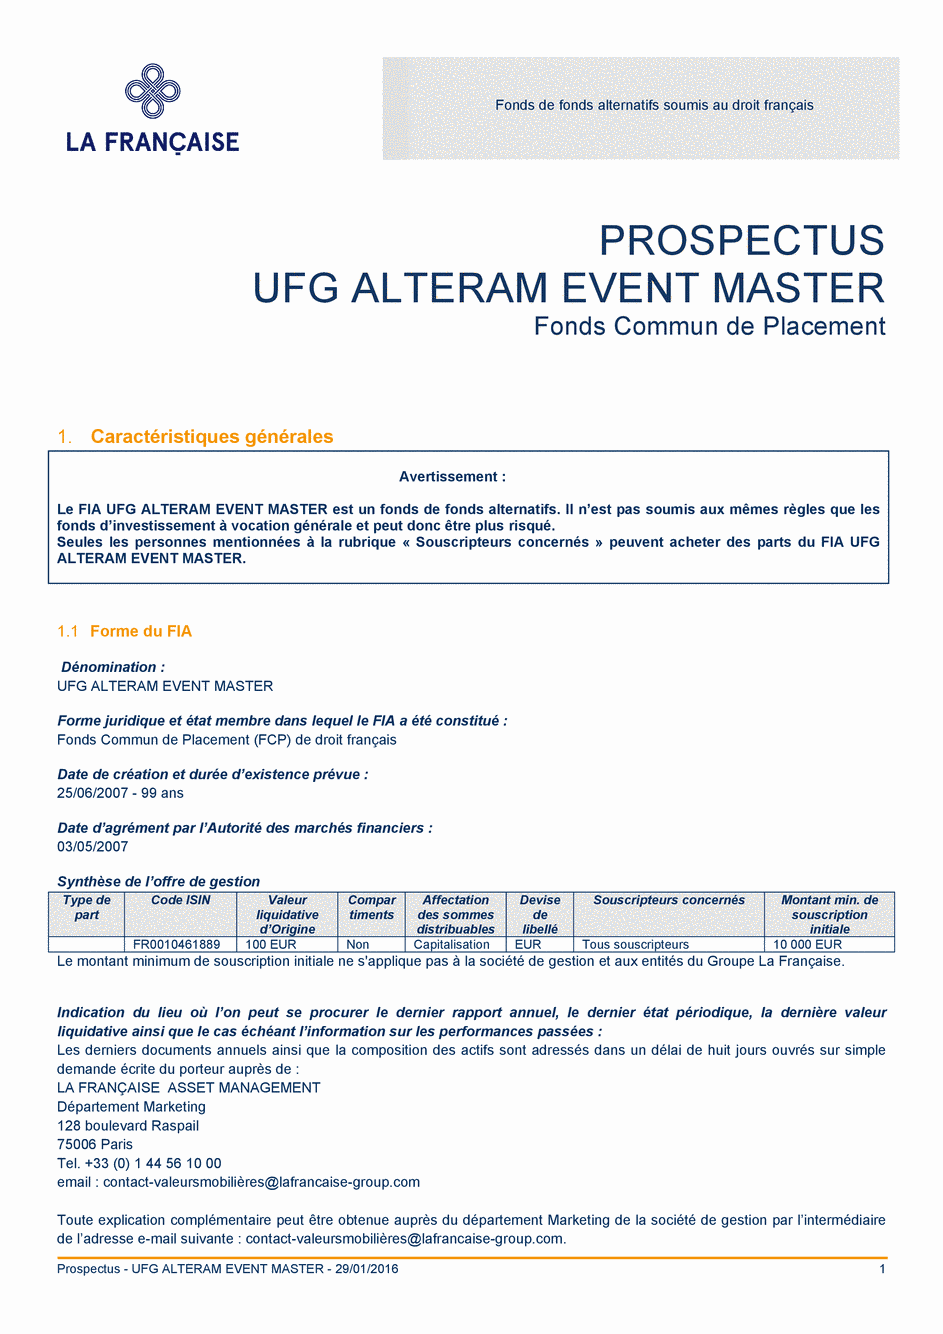 Prospectus UFG ALTERAM Event Master - 29/01/2016 - Français